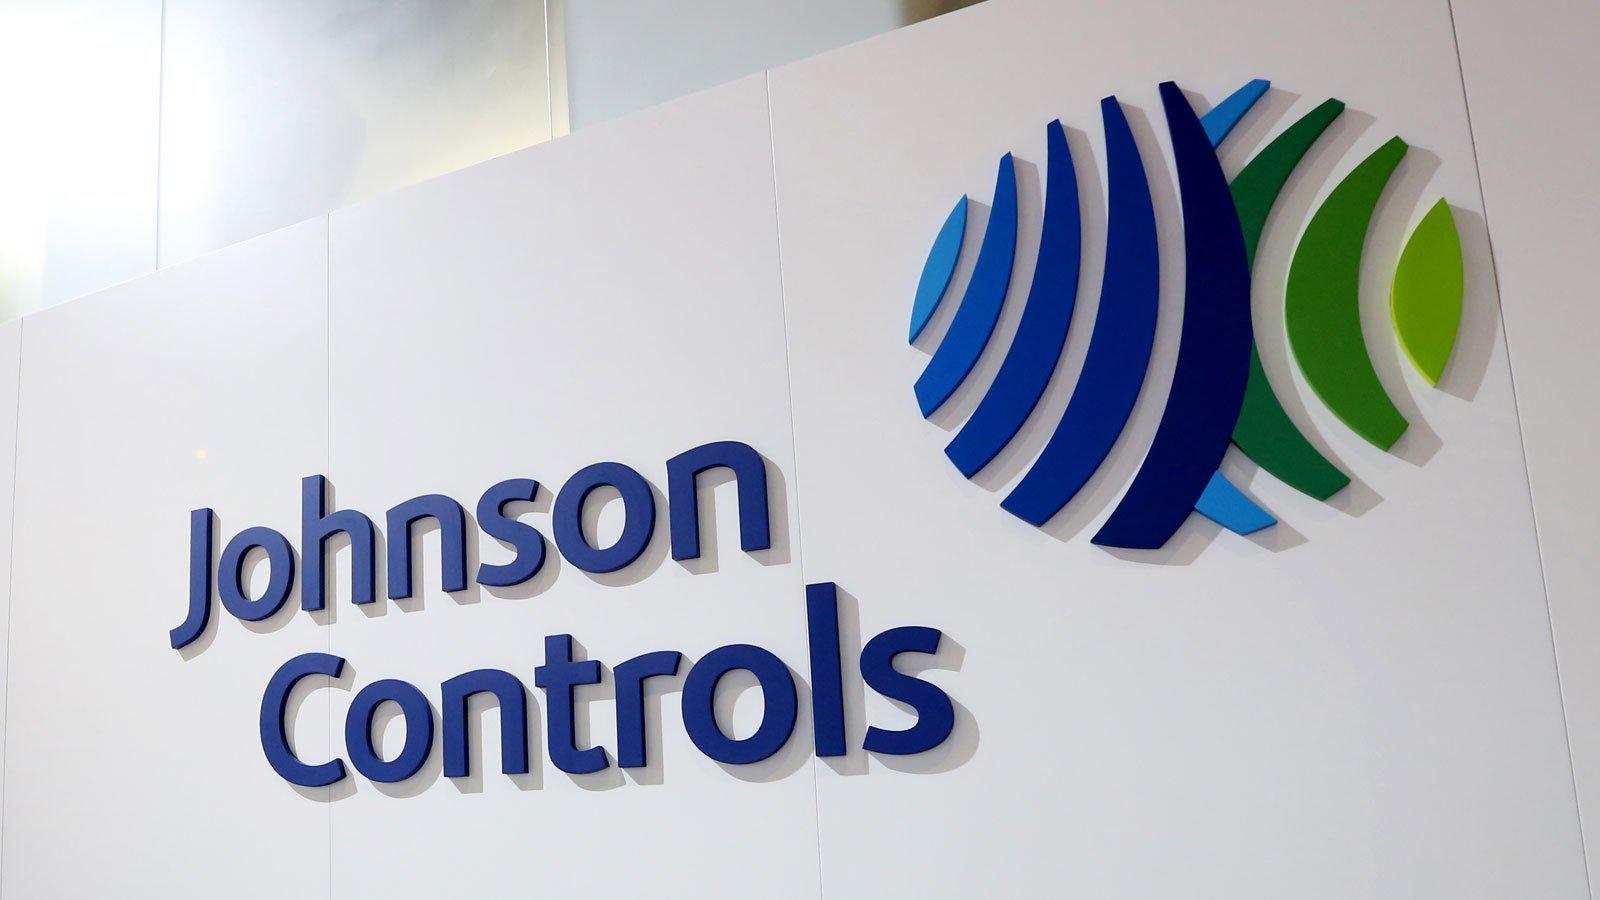 Johnson Controls says ransomware attack cost $27 million, data stolen